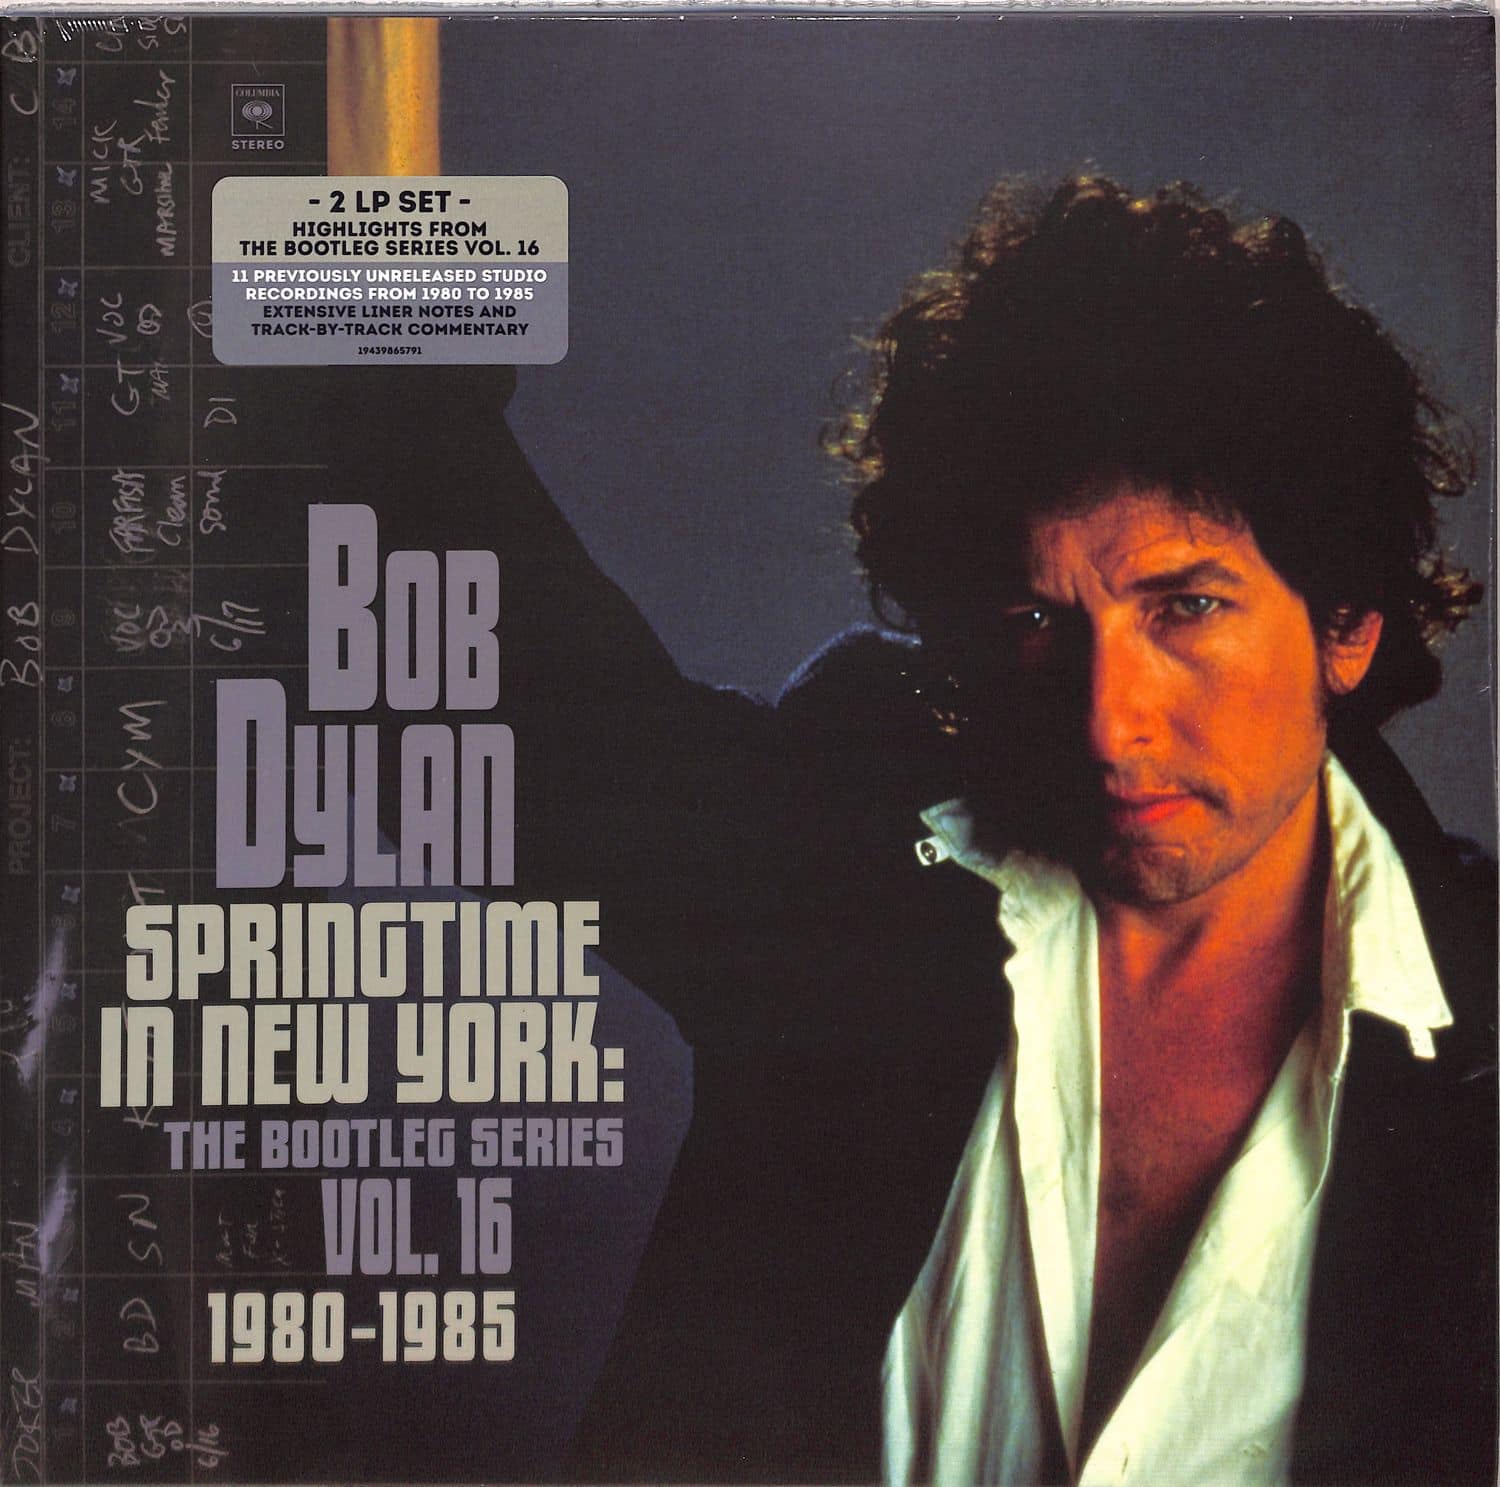 Bob Dylan - SPRINGTIME IN NEW YORK: THE BOOTLEG SERIES VOL. 16 